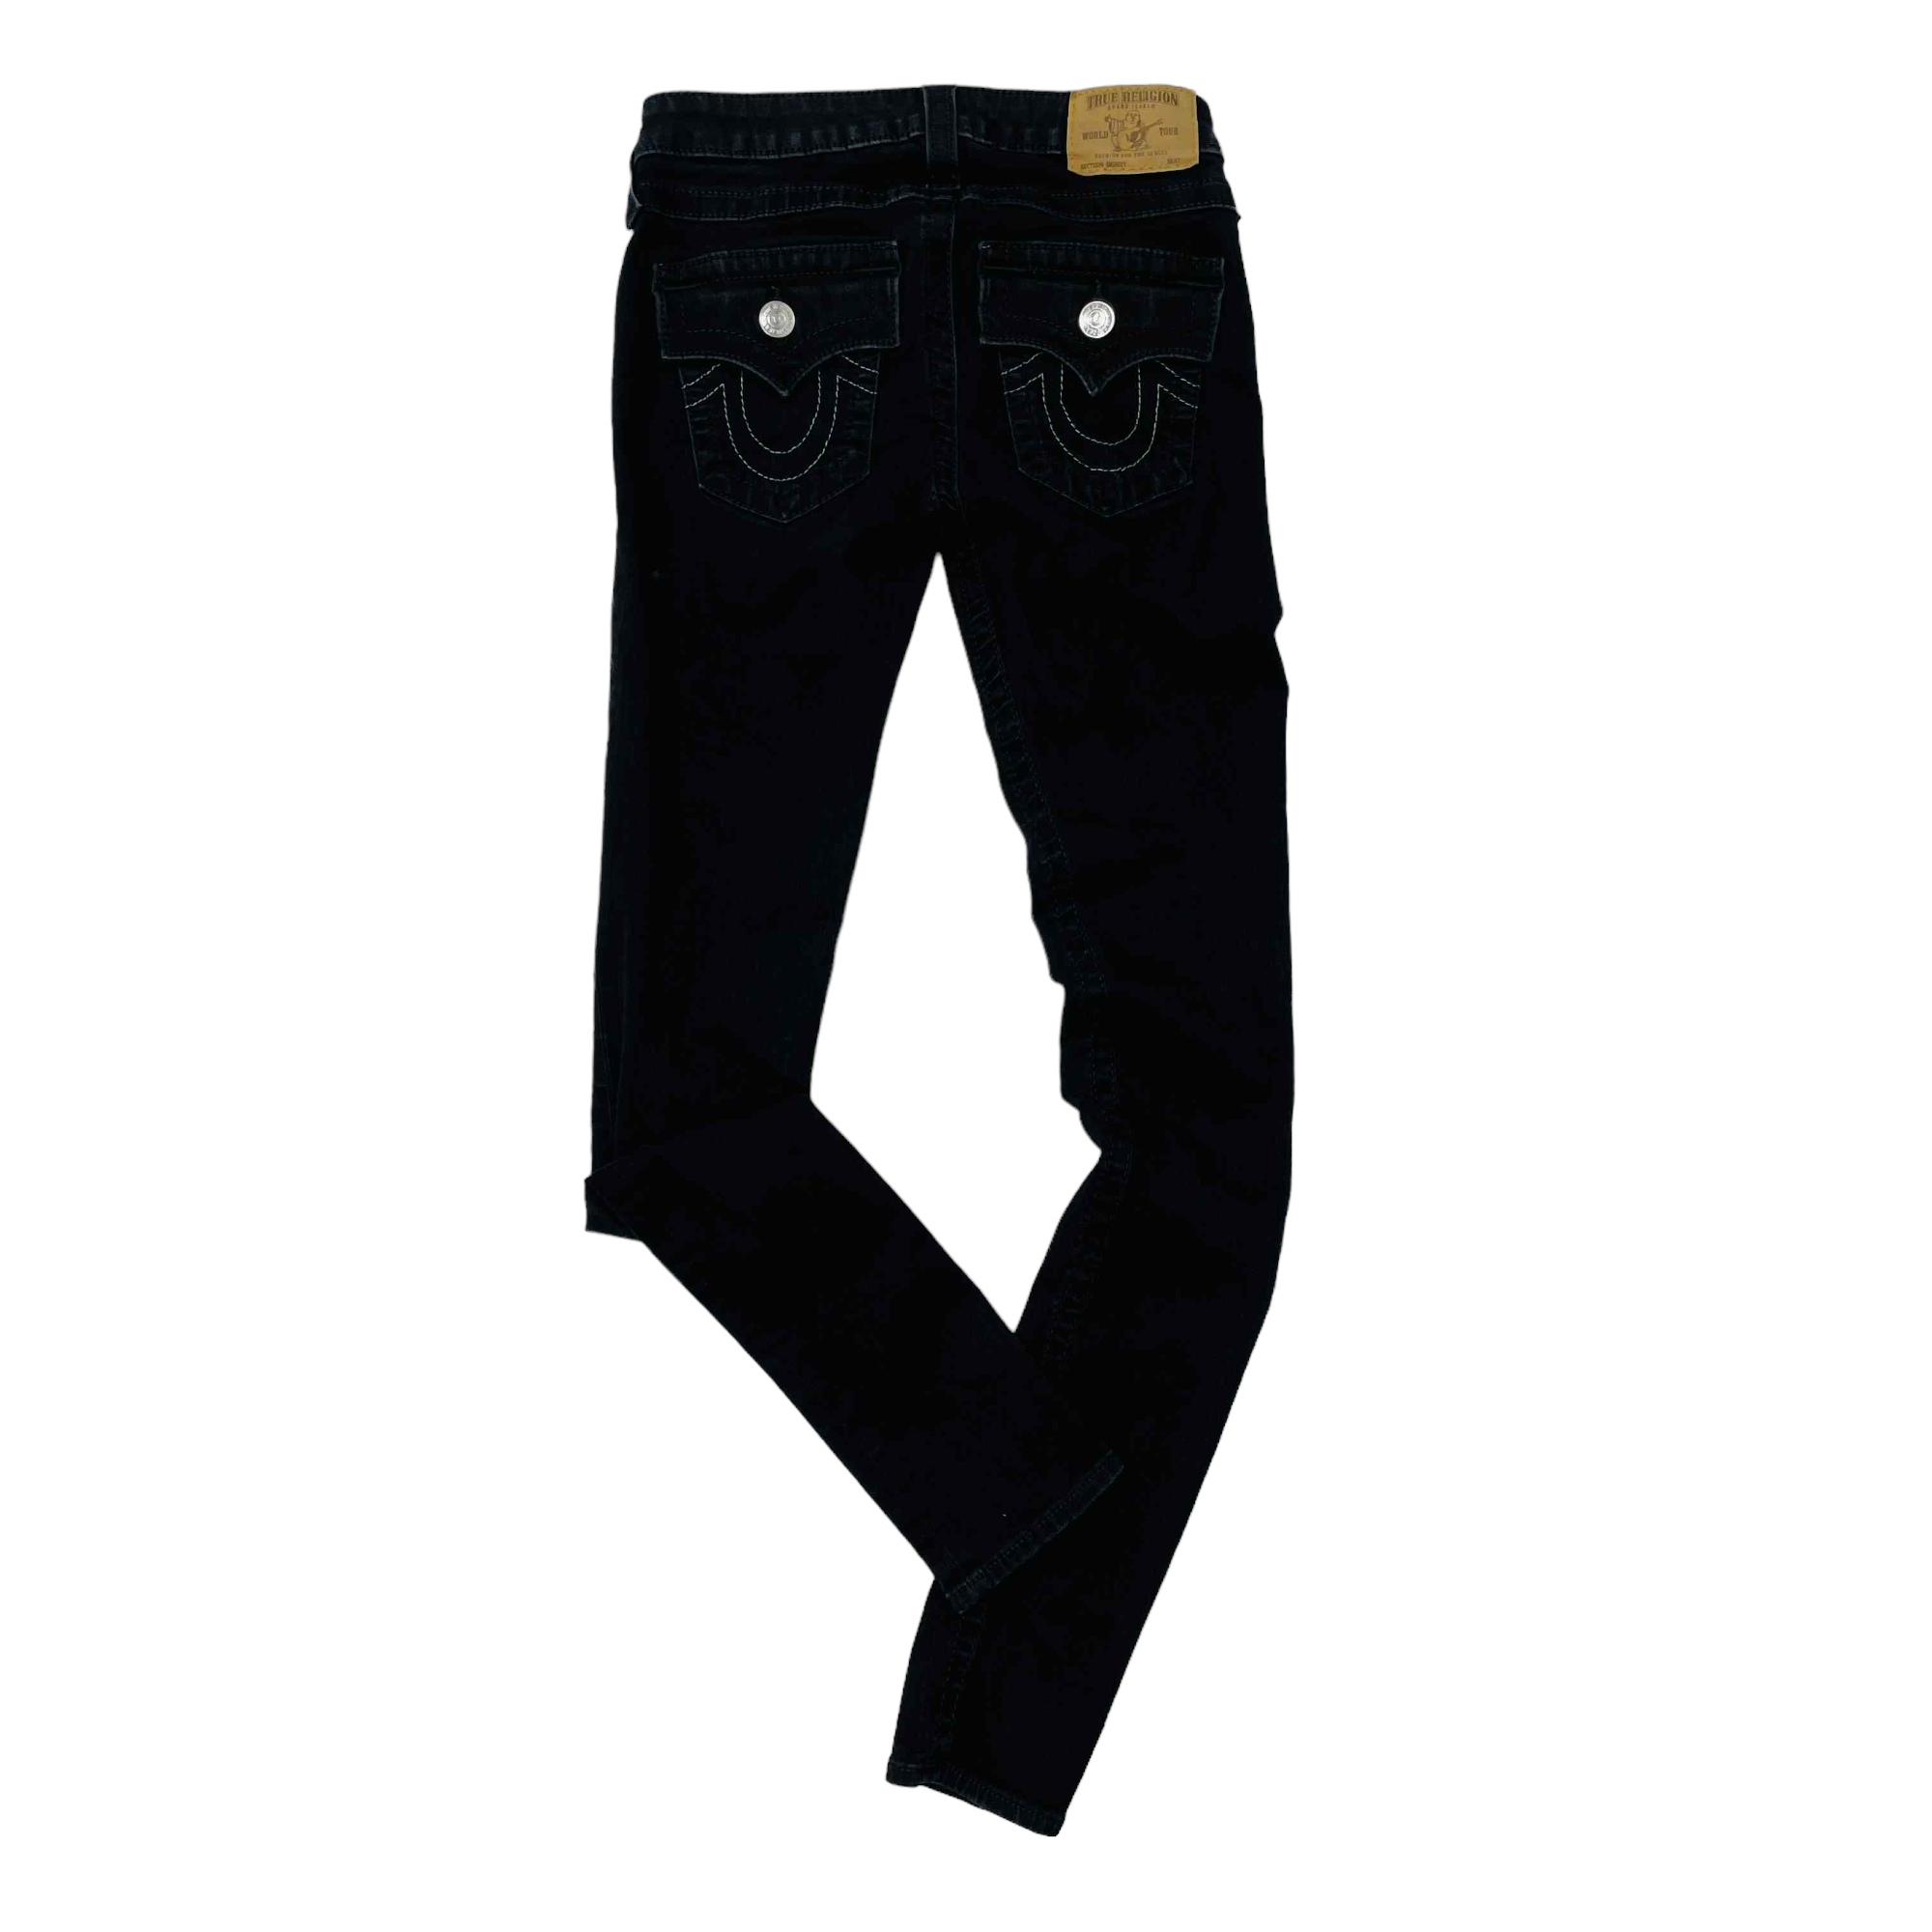 True Religion Jeans - W26 L32